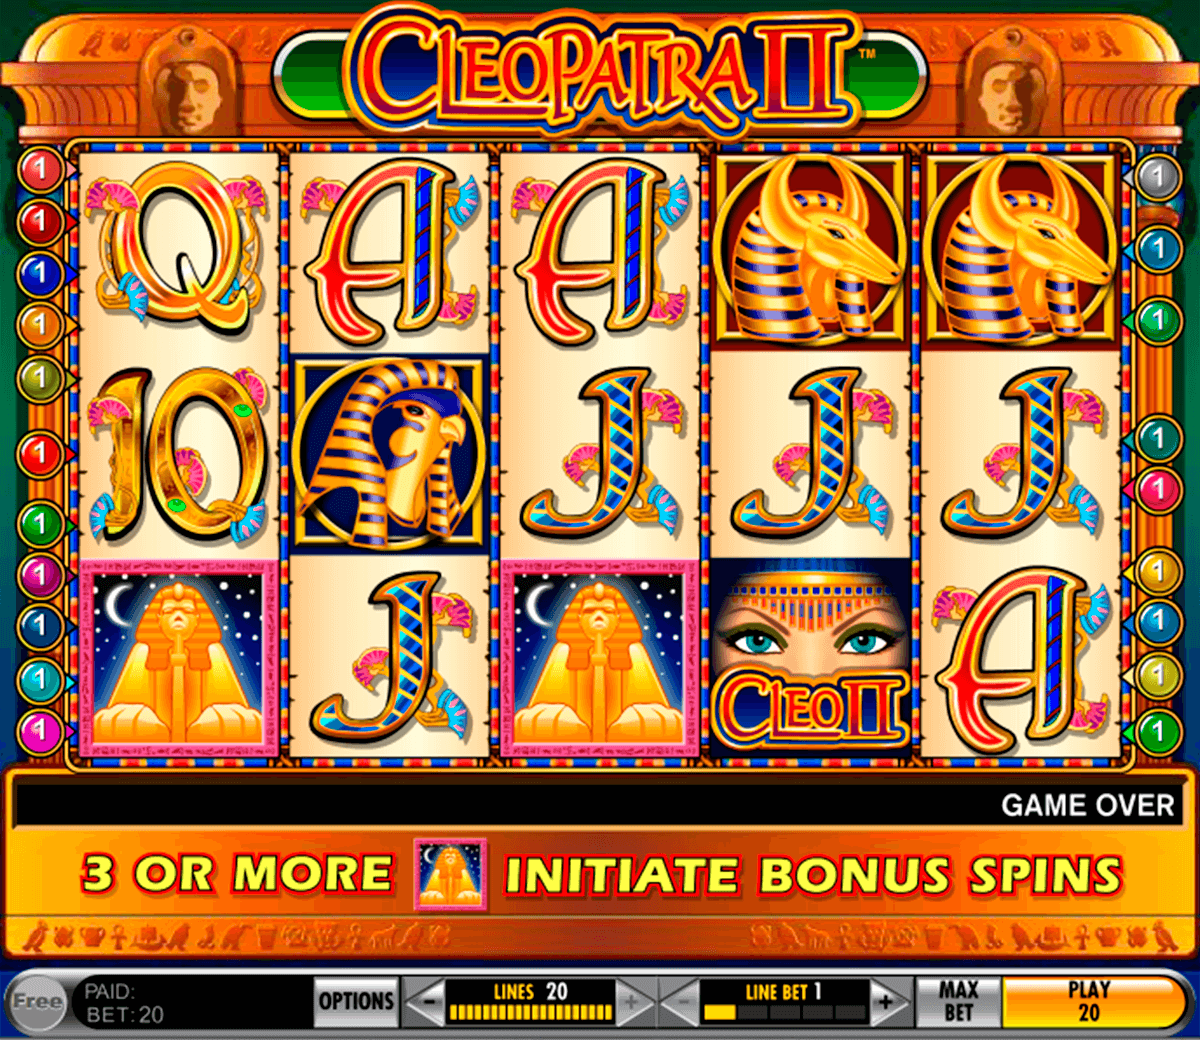 Casino guru cleopatra gratis bonos australianos 140799